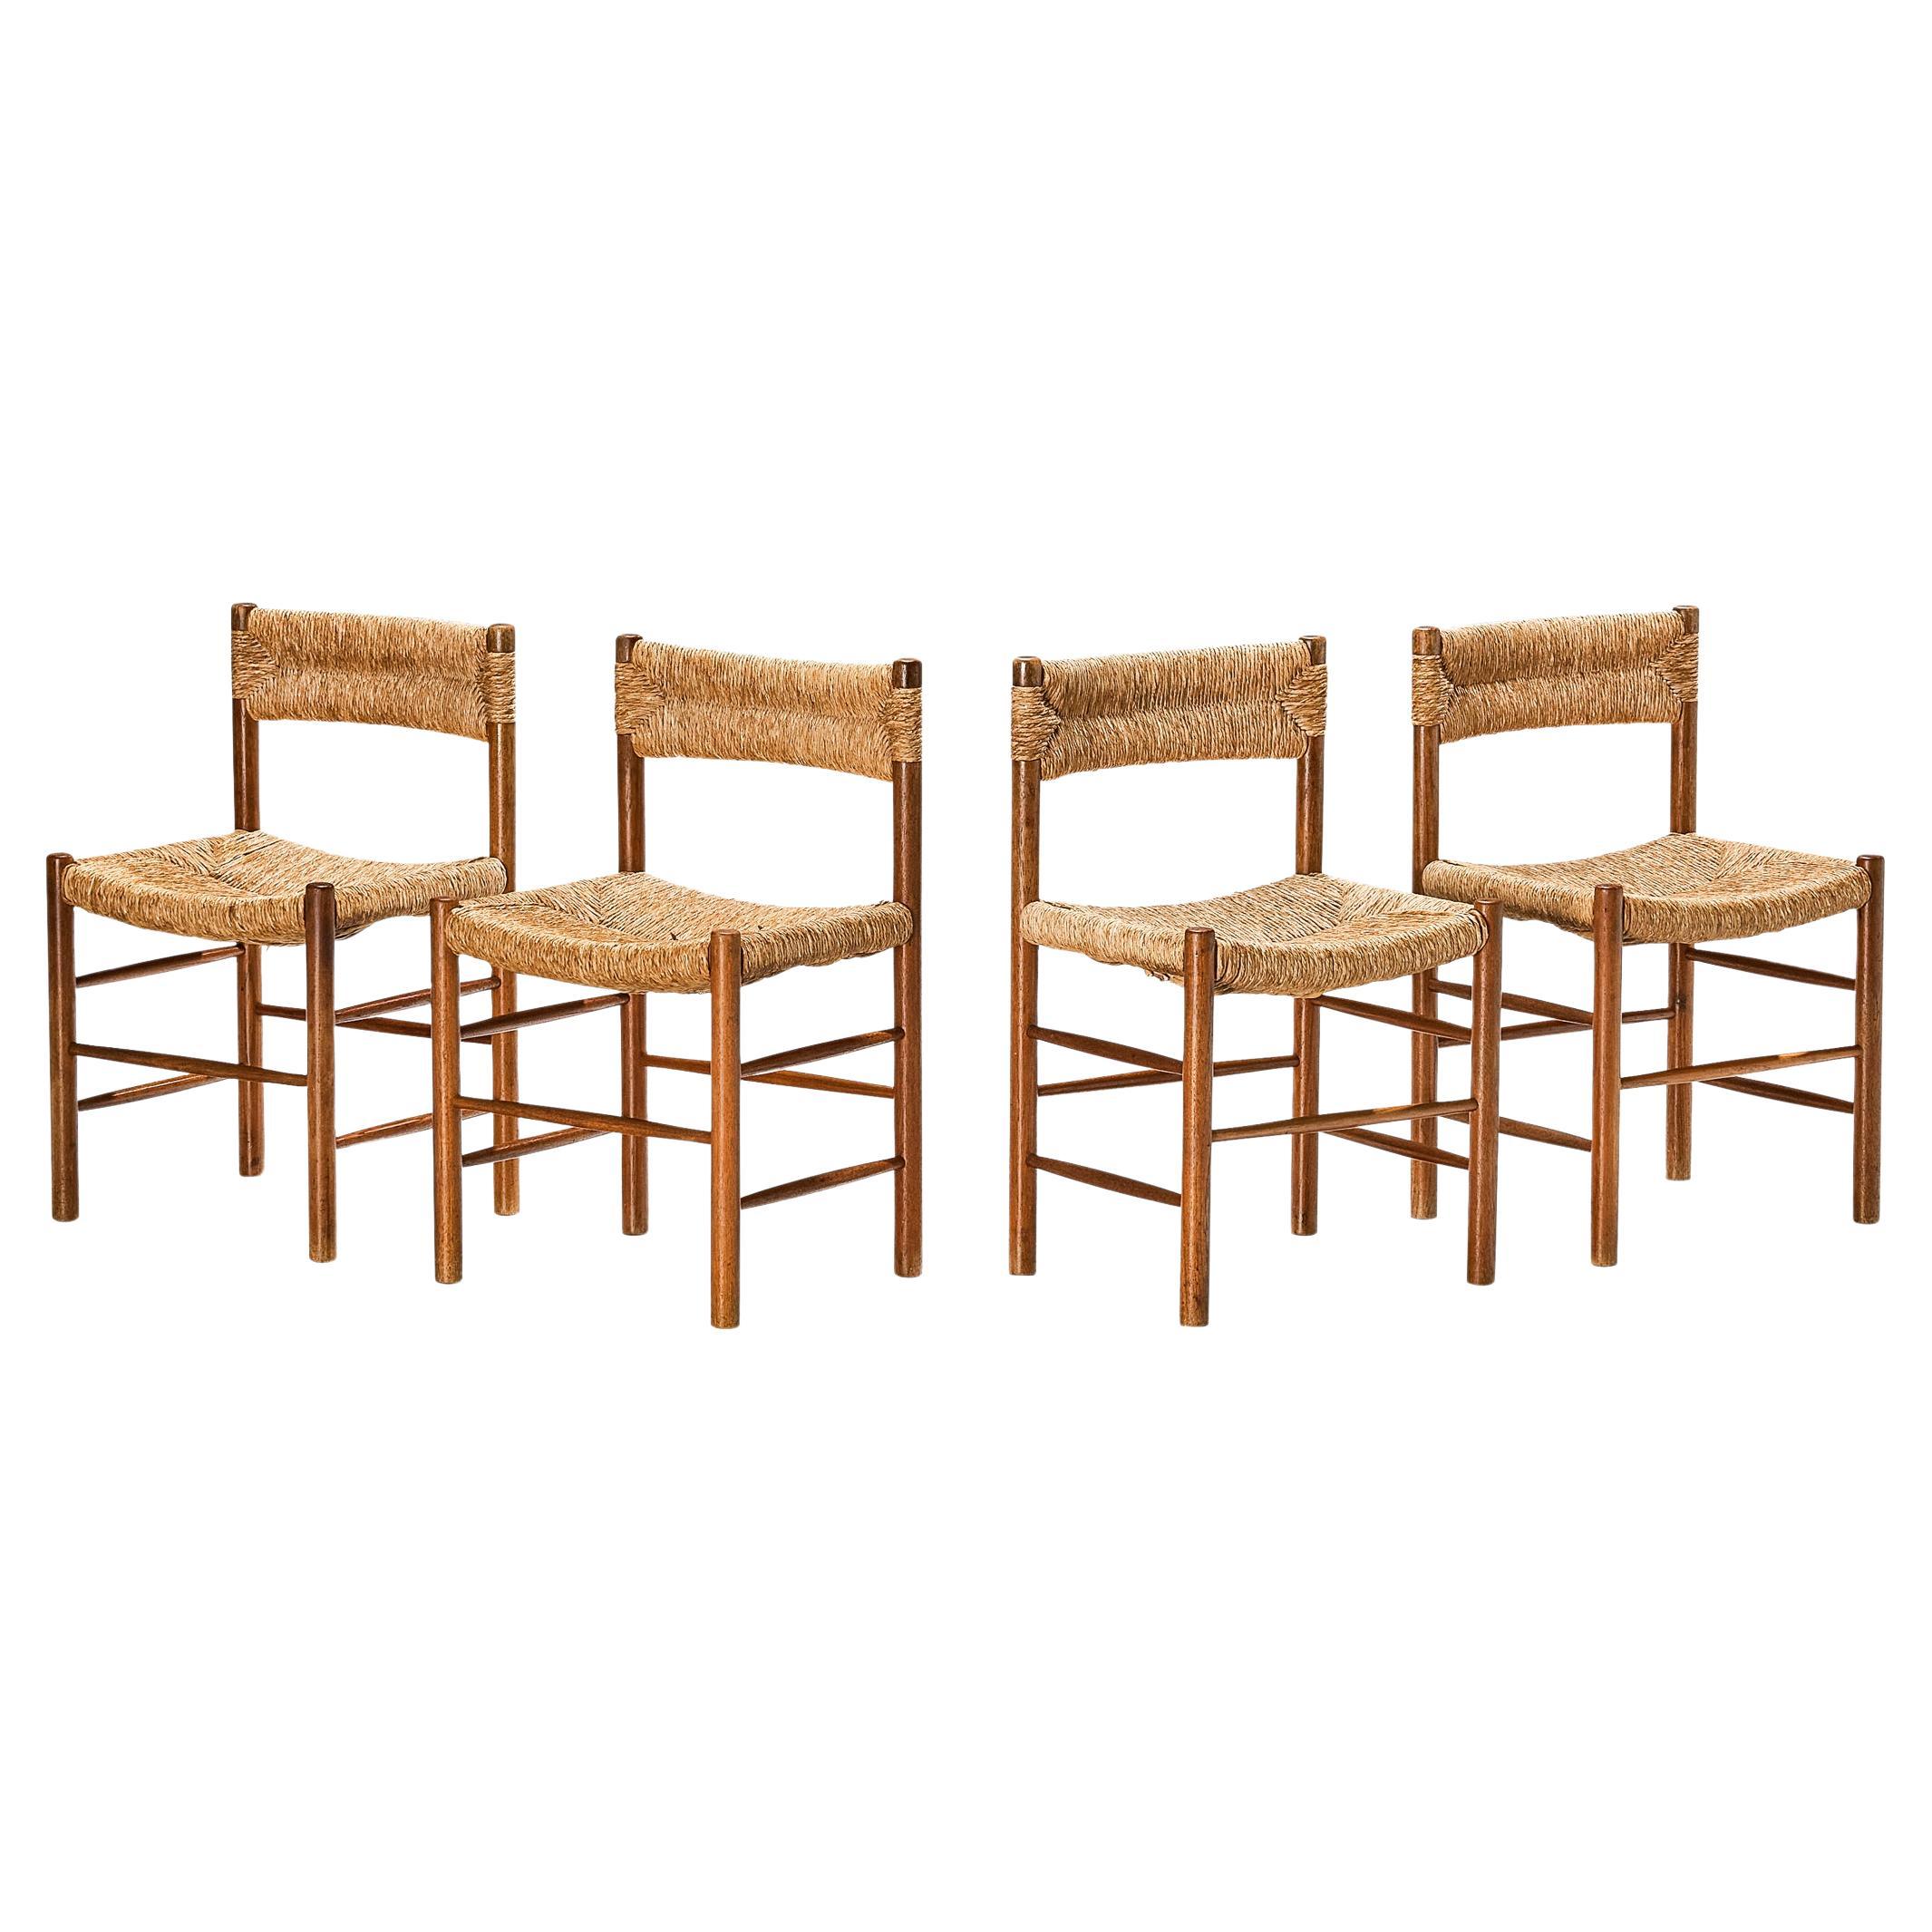 Robert Sentou Dining Room Chairs